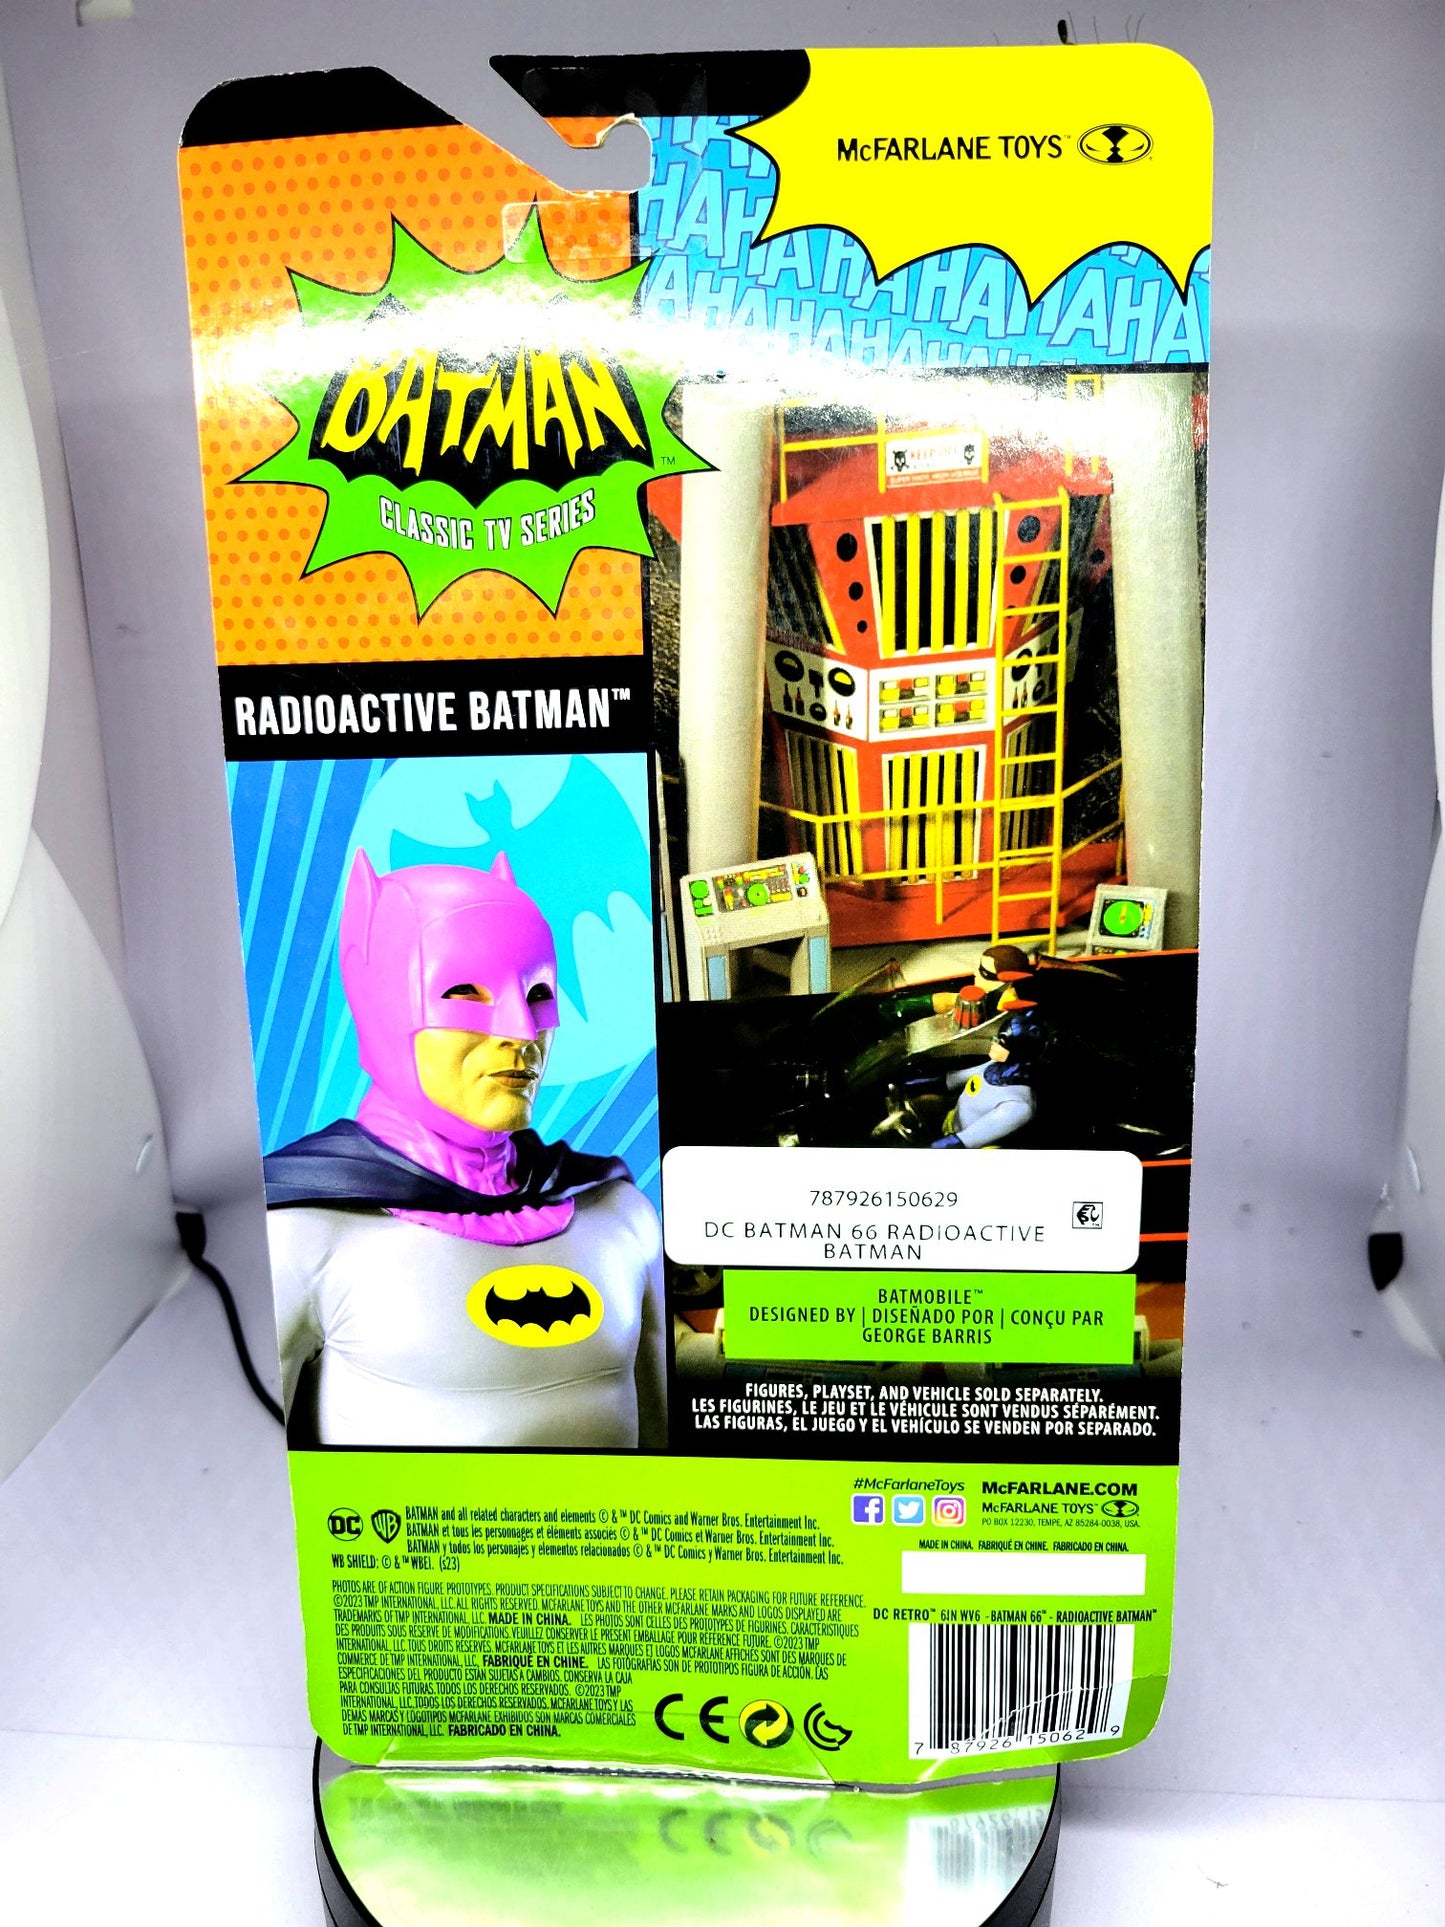 McFarlane Toys Batman The Classic TV Series Radioactive Batman Action Figure